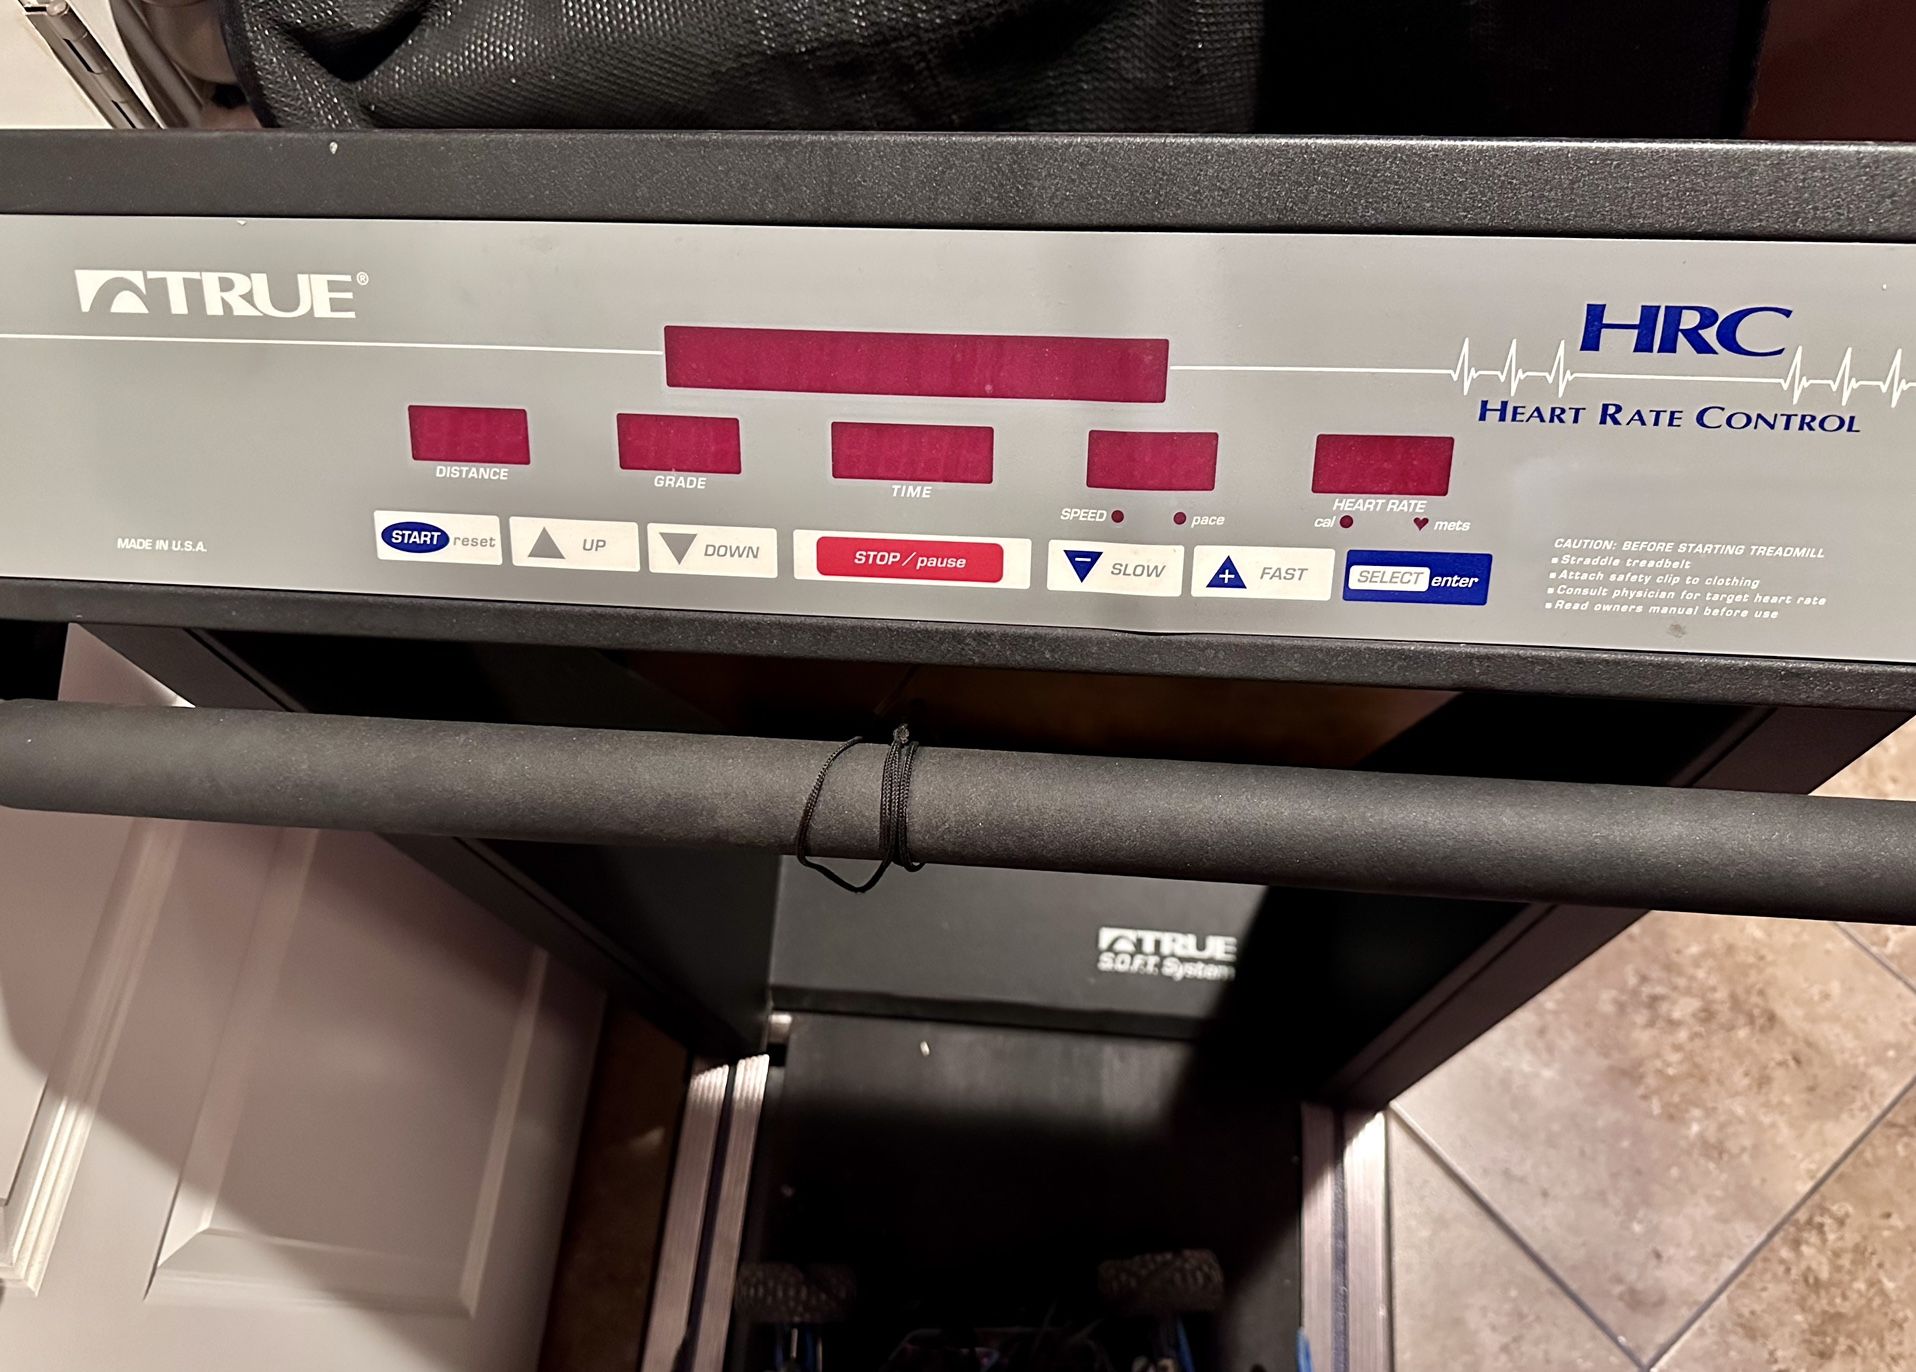 HRC True Treadmill 